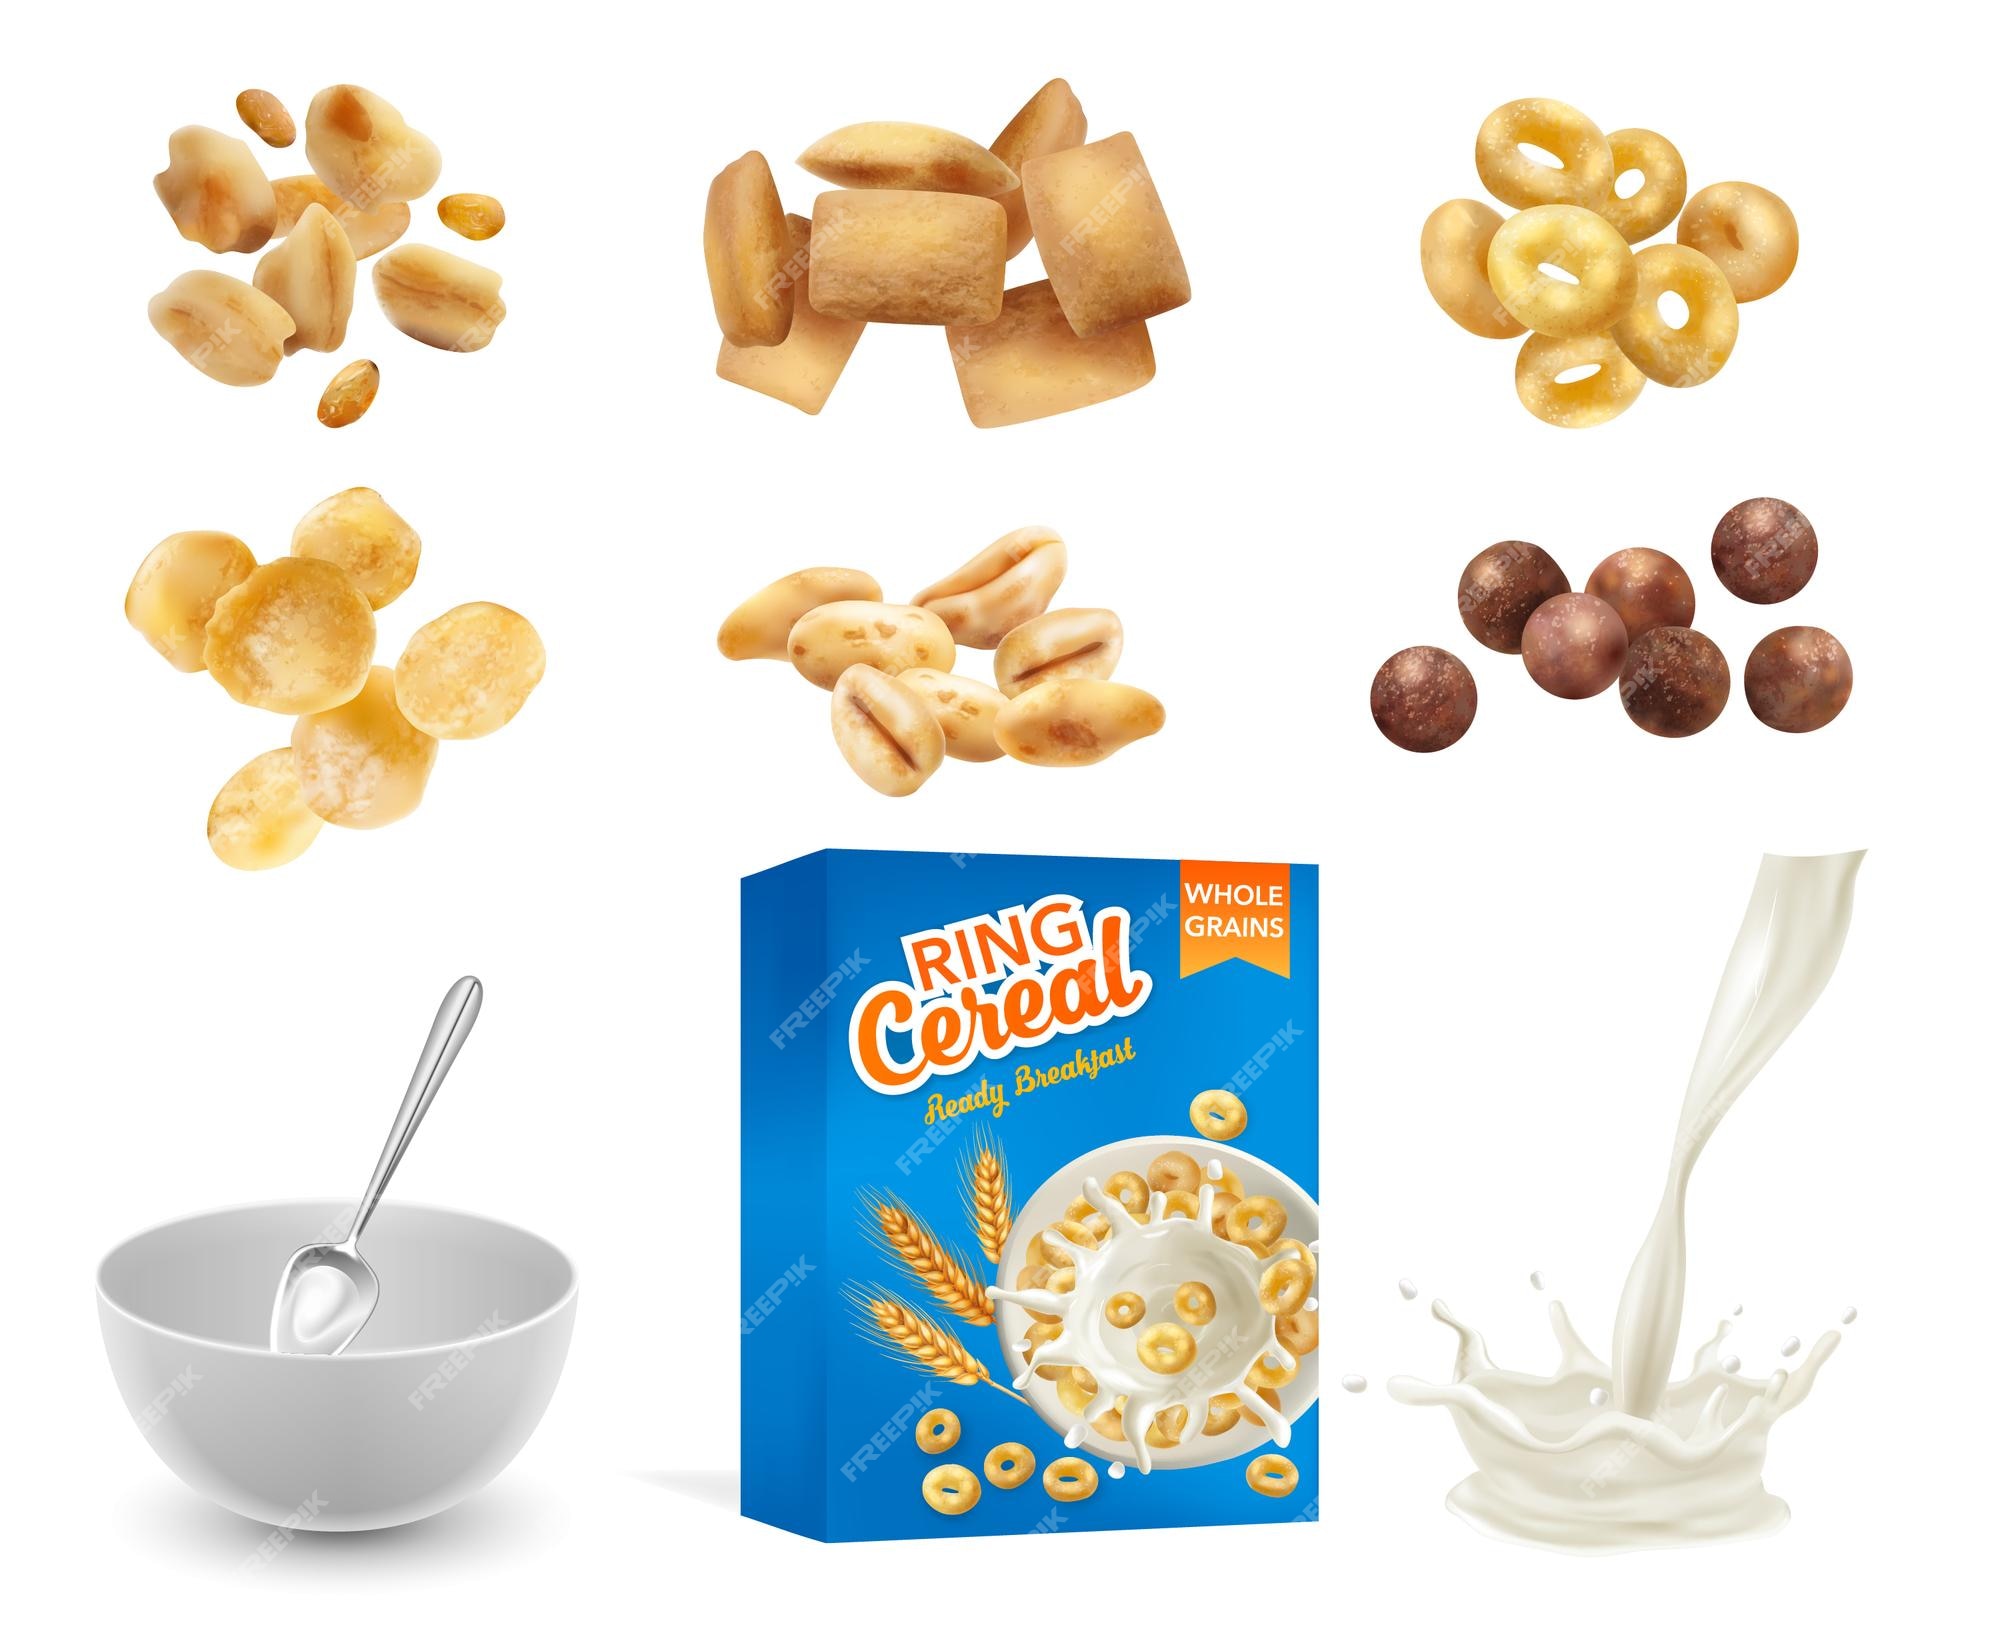 Cereal Vectors & Illustrations for Free Download | Freepik